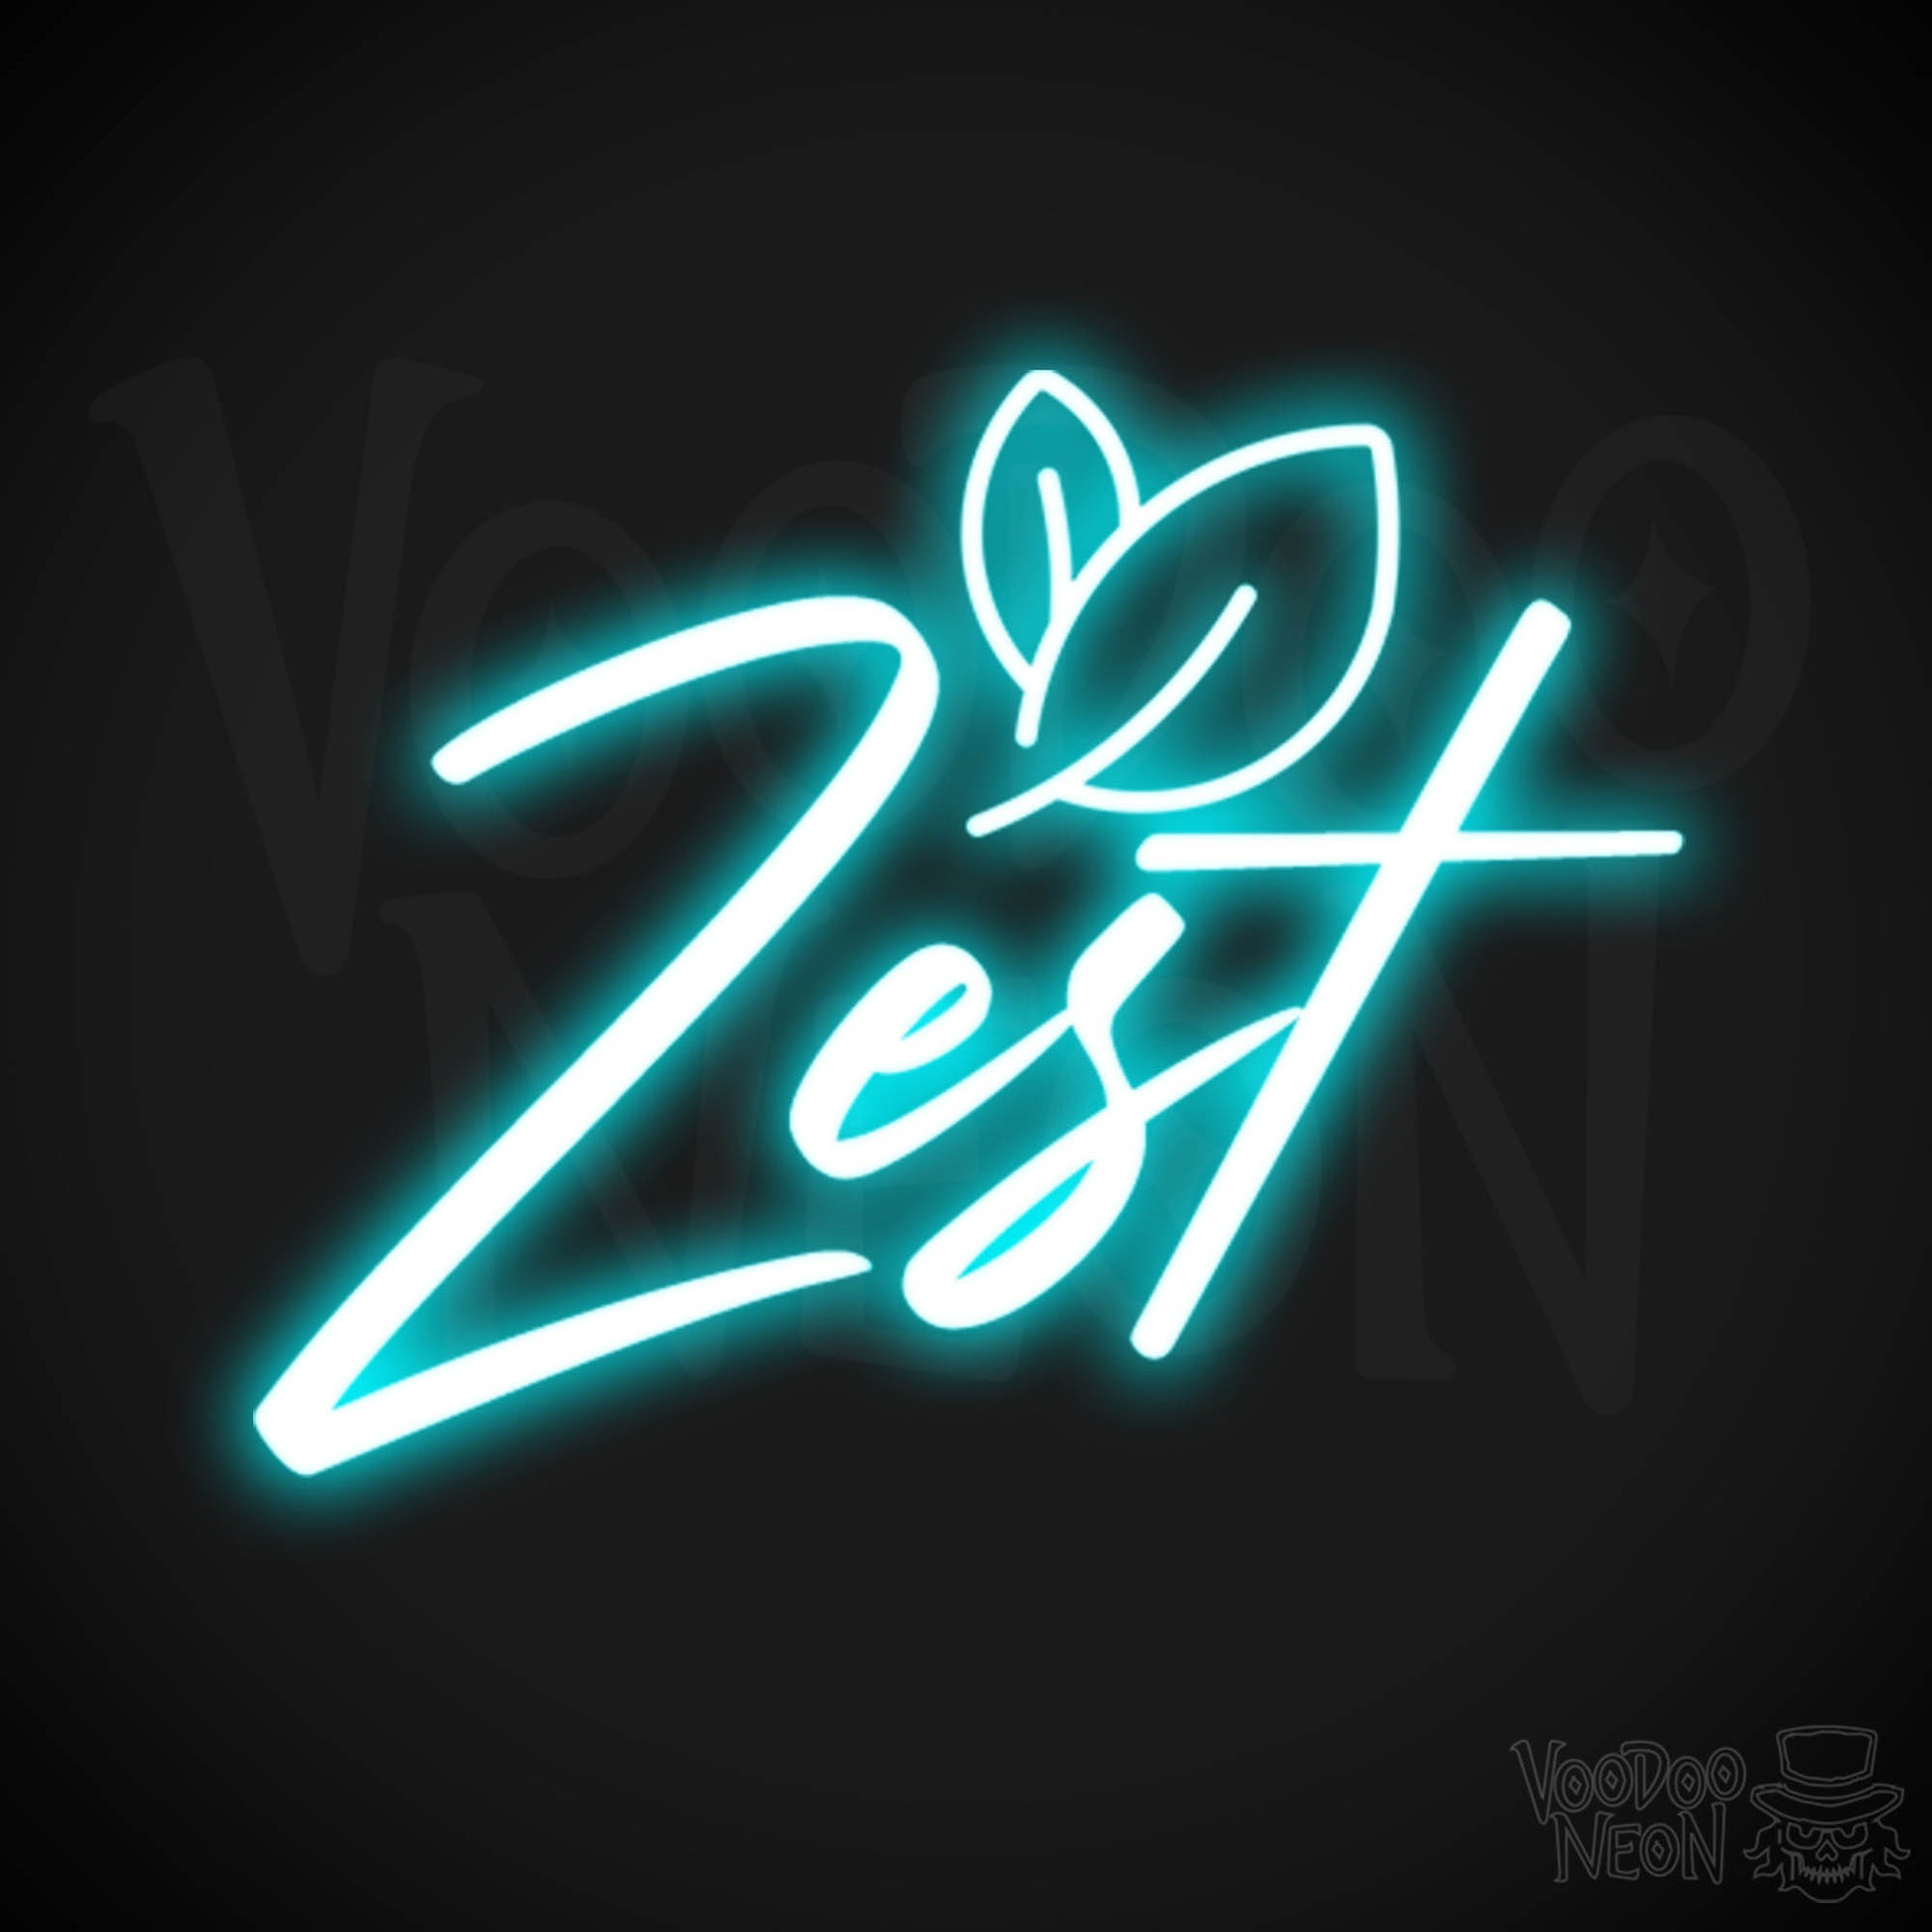 Zest Neon Sign - Neon Zest Sign - Color Ice Blue